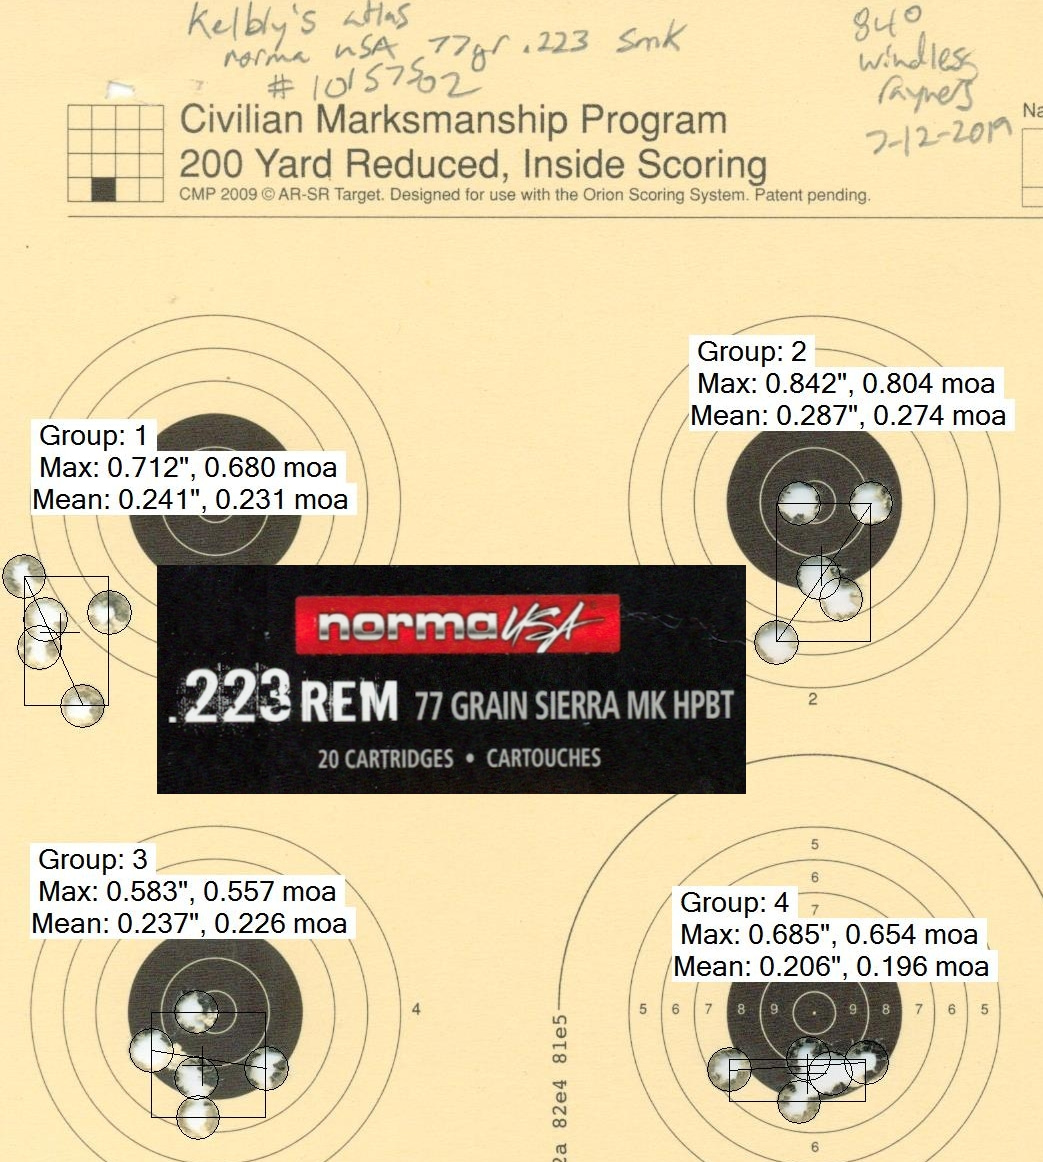  Norma USA 77gr SMK testing w/ Kelbly's Atlas Tactical